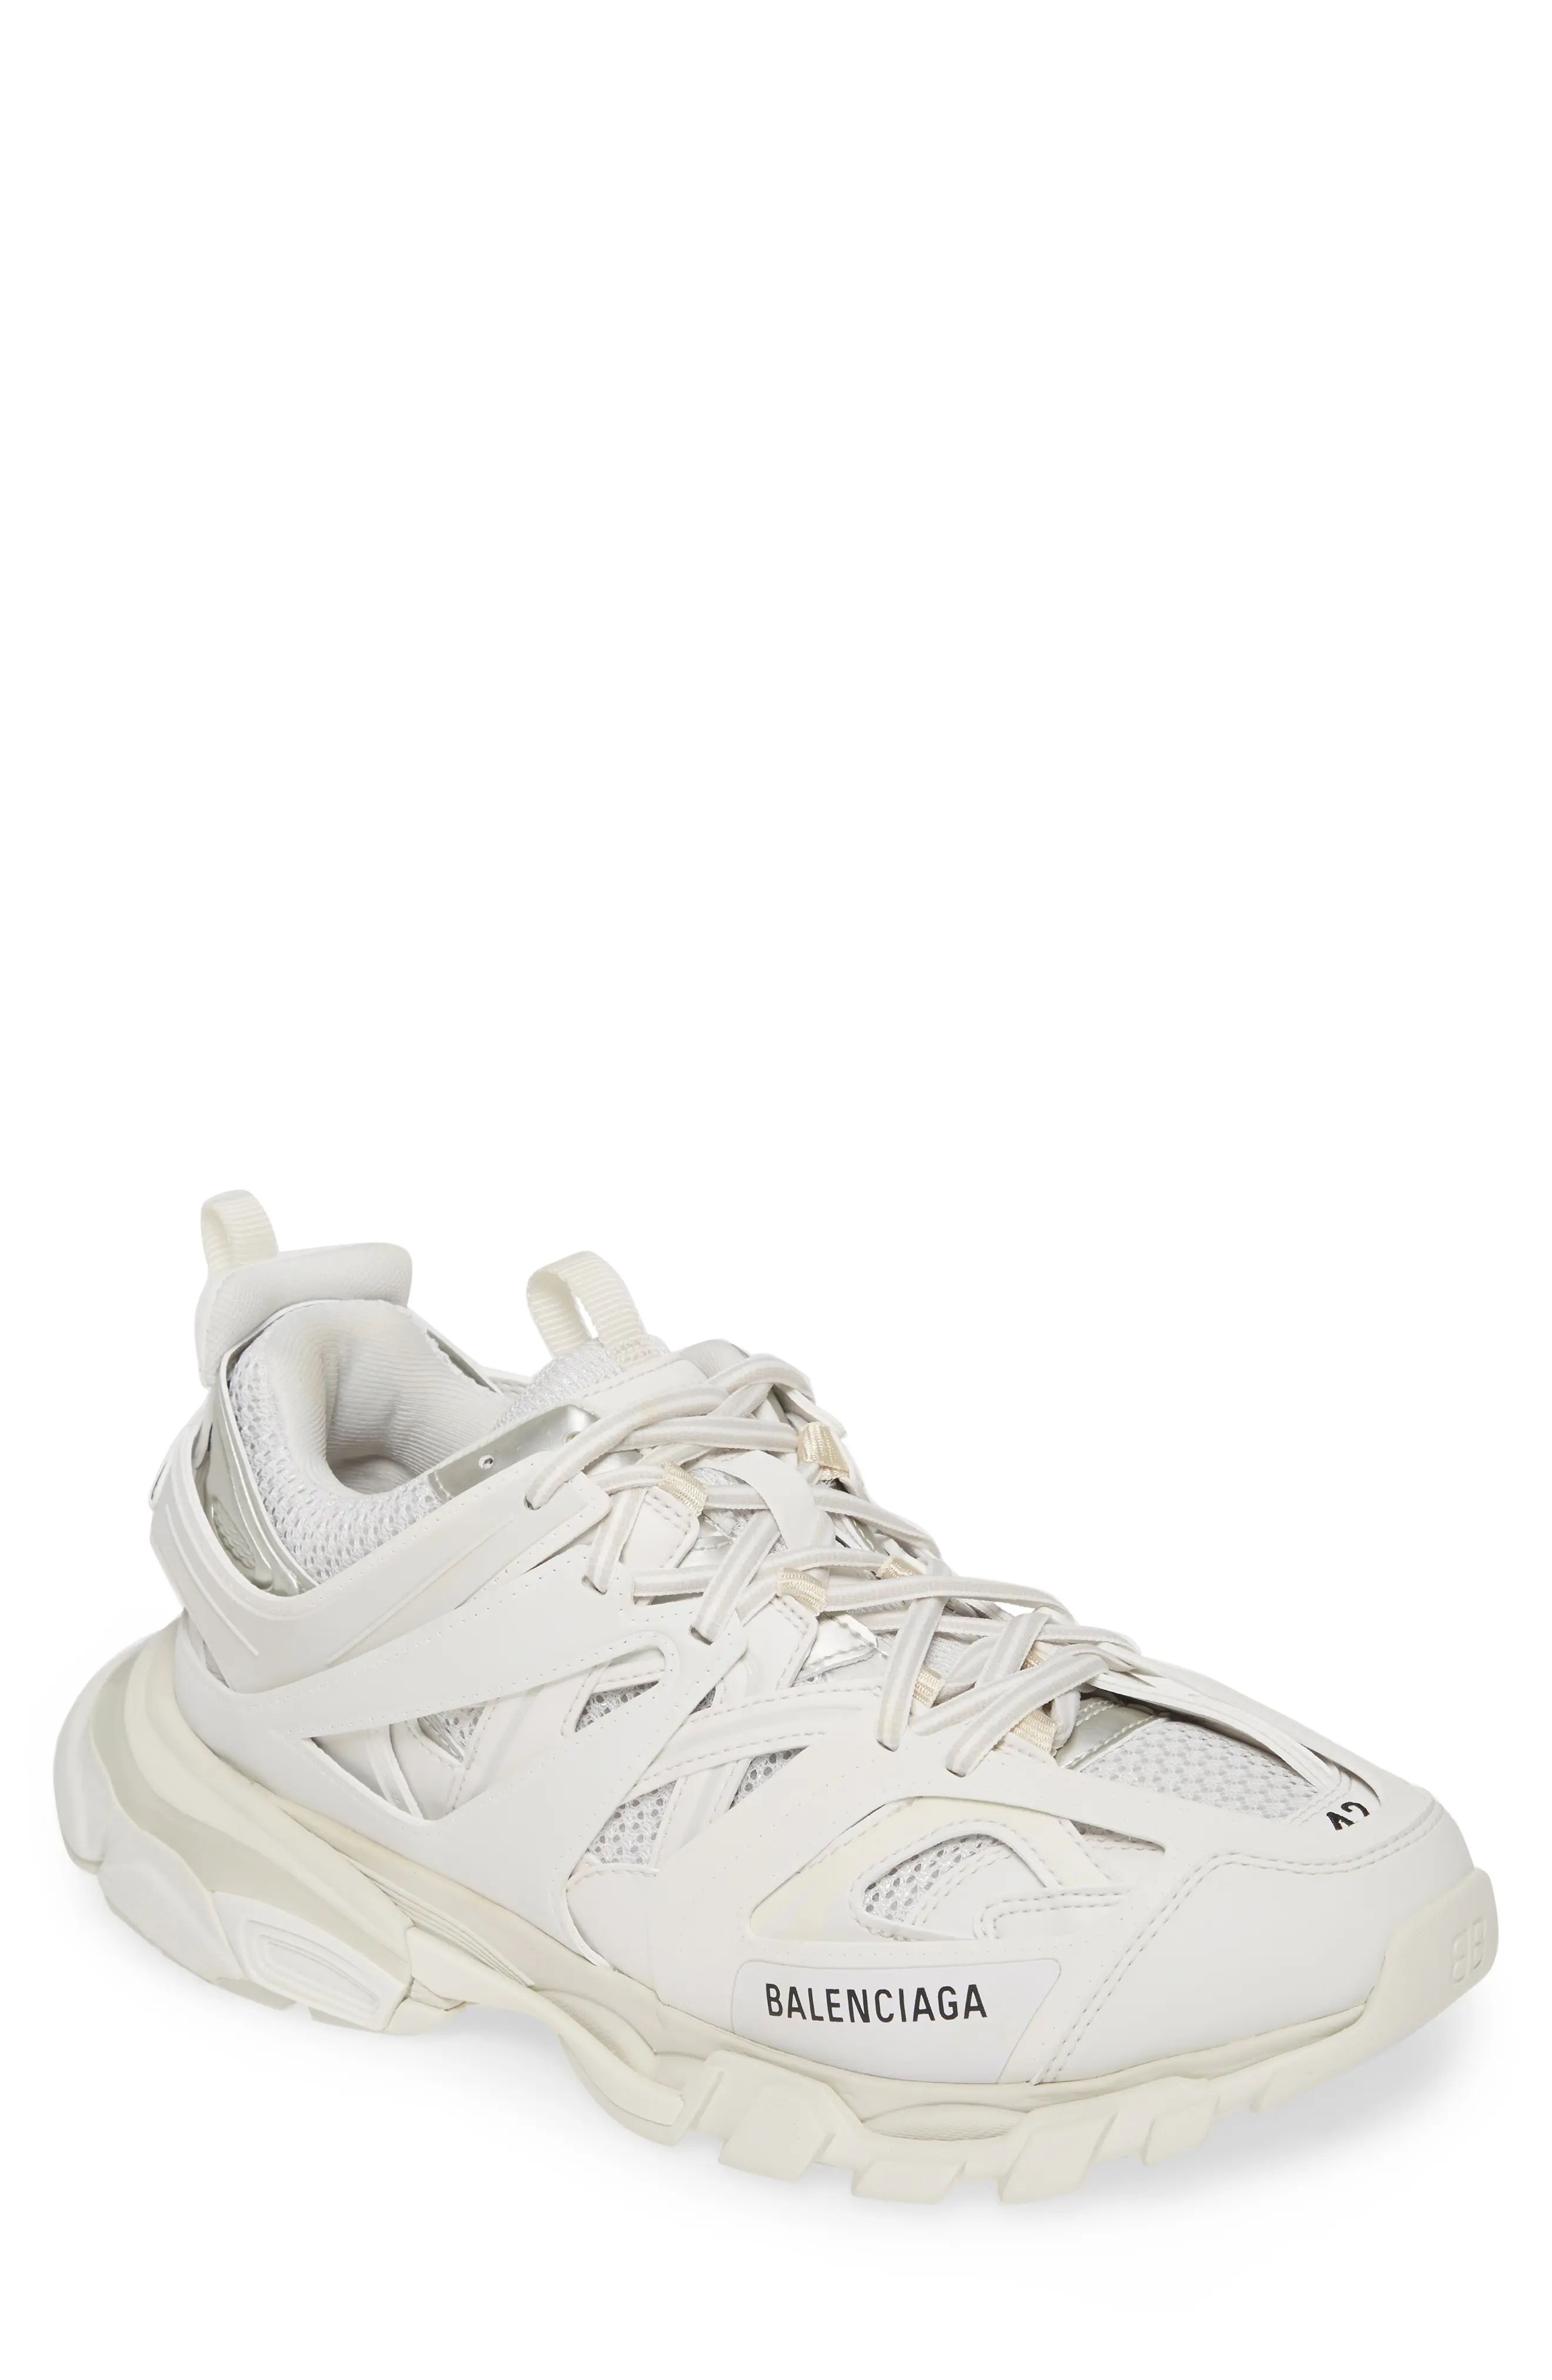 Balenciaga Track Sneaker in White/white at Nordstrom, Size 13Us | Nordstrom